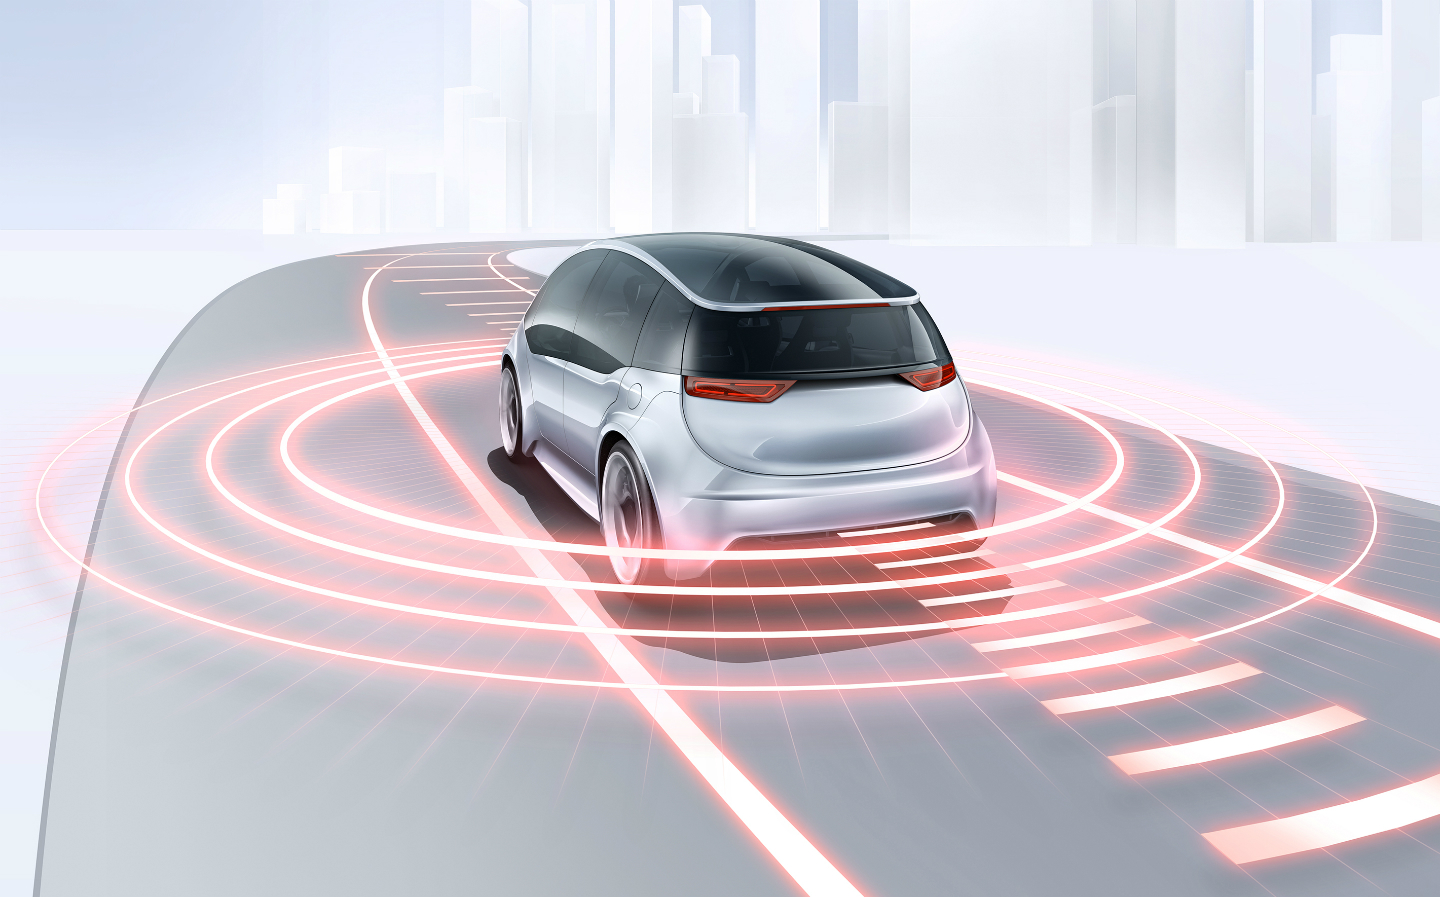 The best new car tech reveals at CES 2020